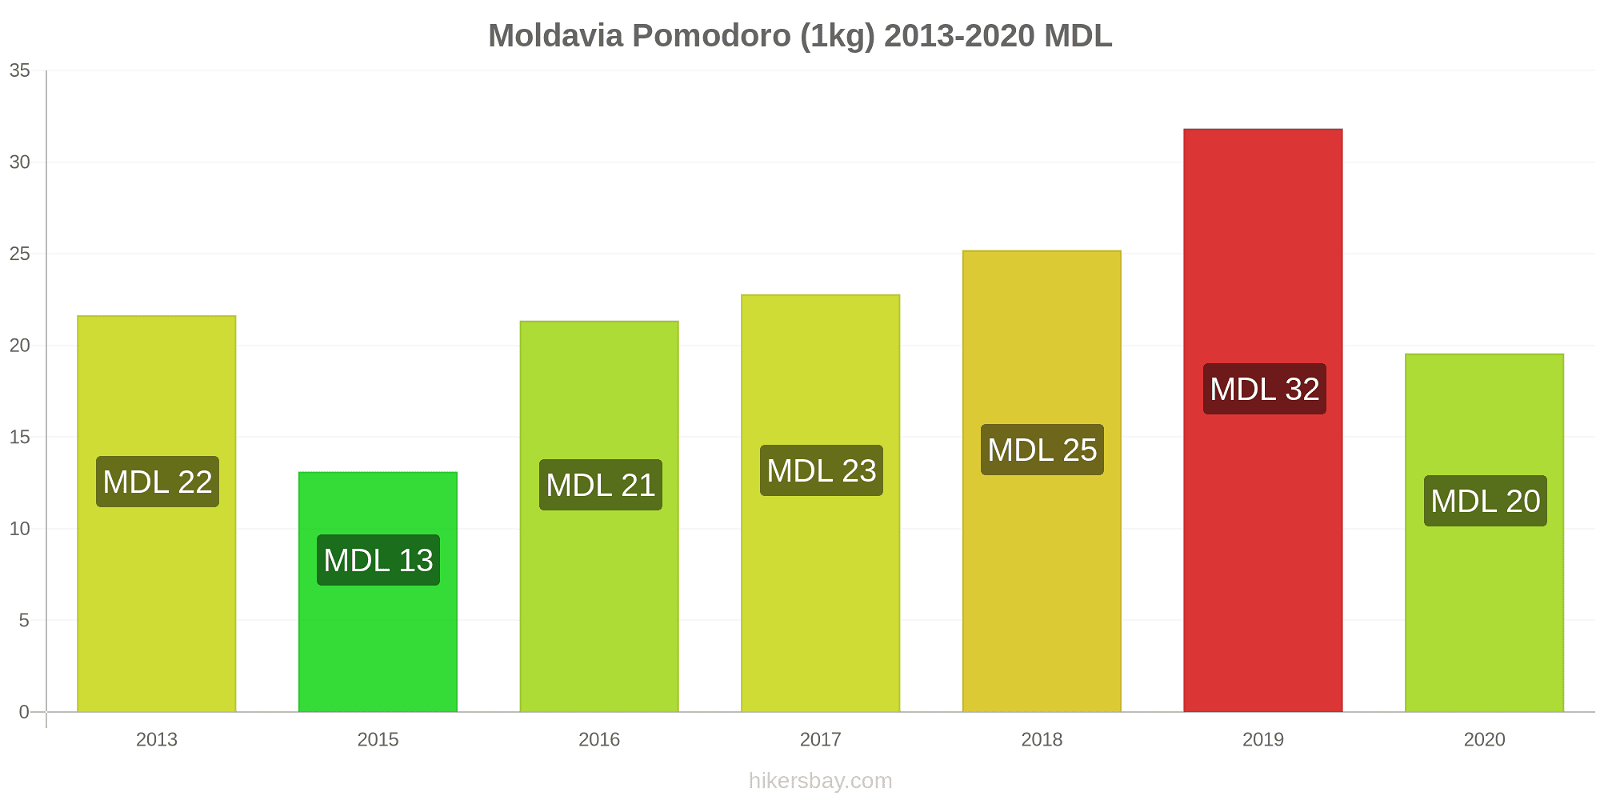 Moldavia variazioni di prezzo Pomodoro (1kg) hikersbay.com